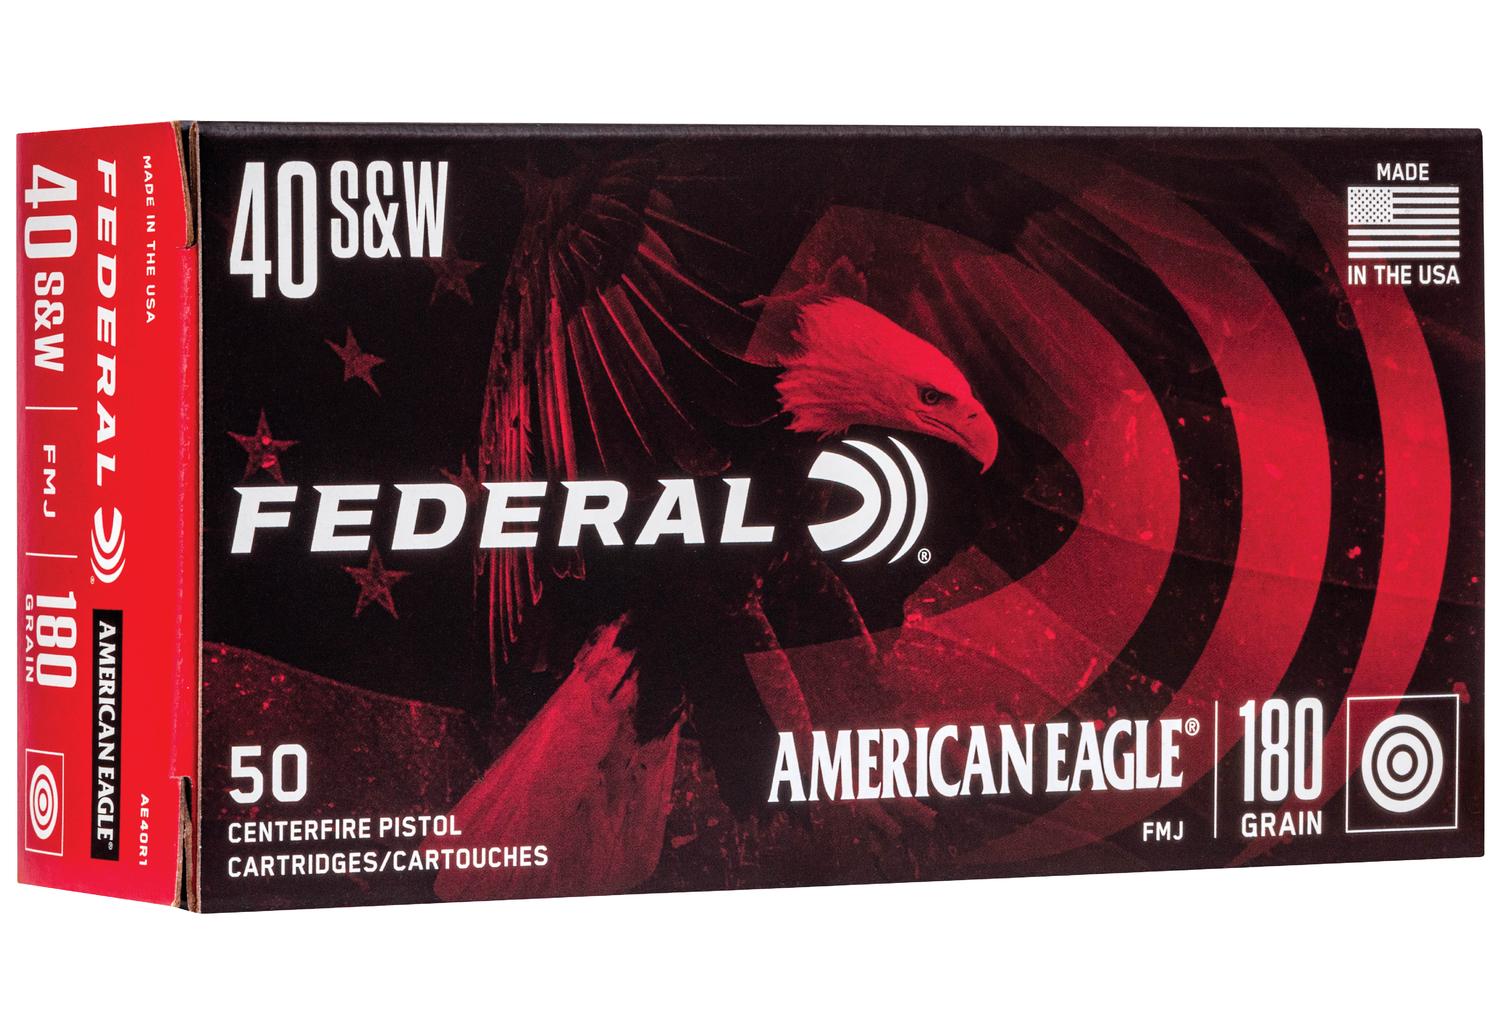  American Eagle 40s & W 180gr.Fmj 50rd Box